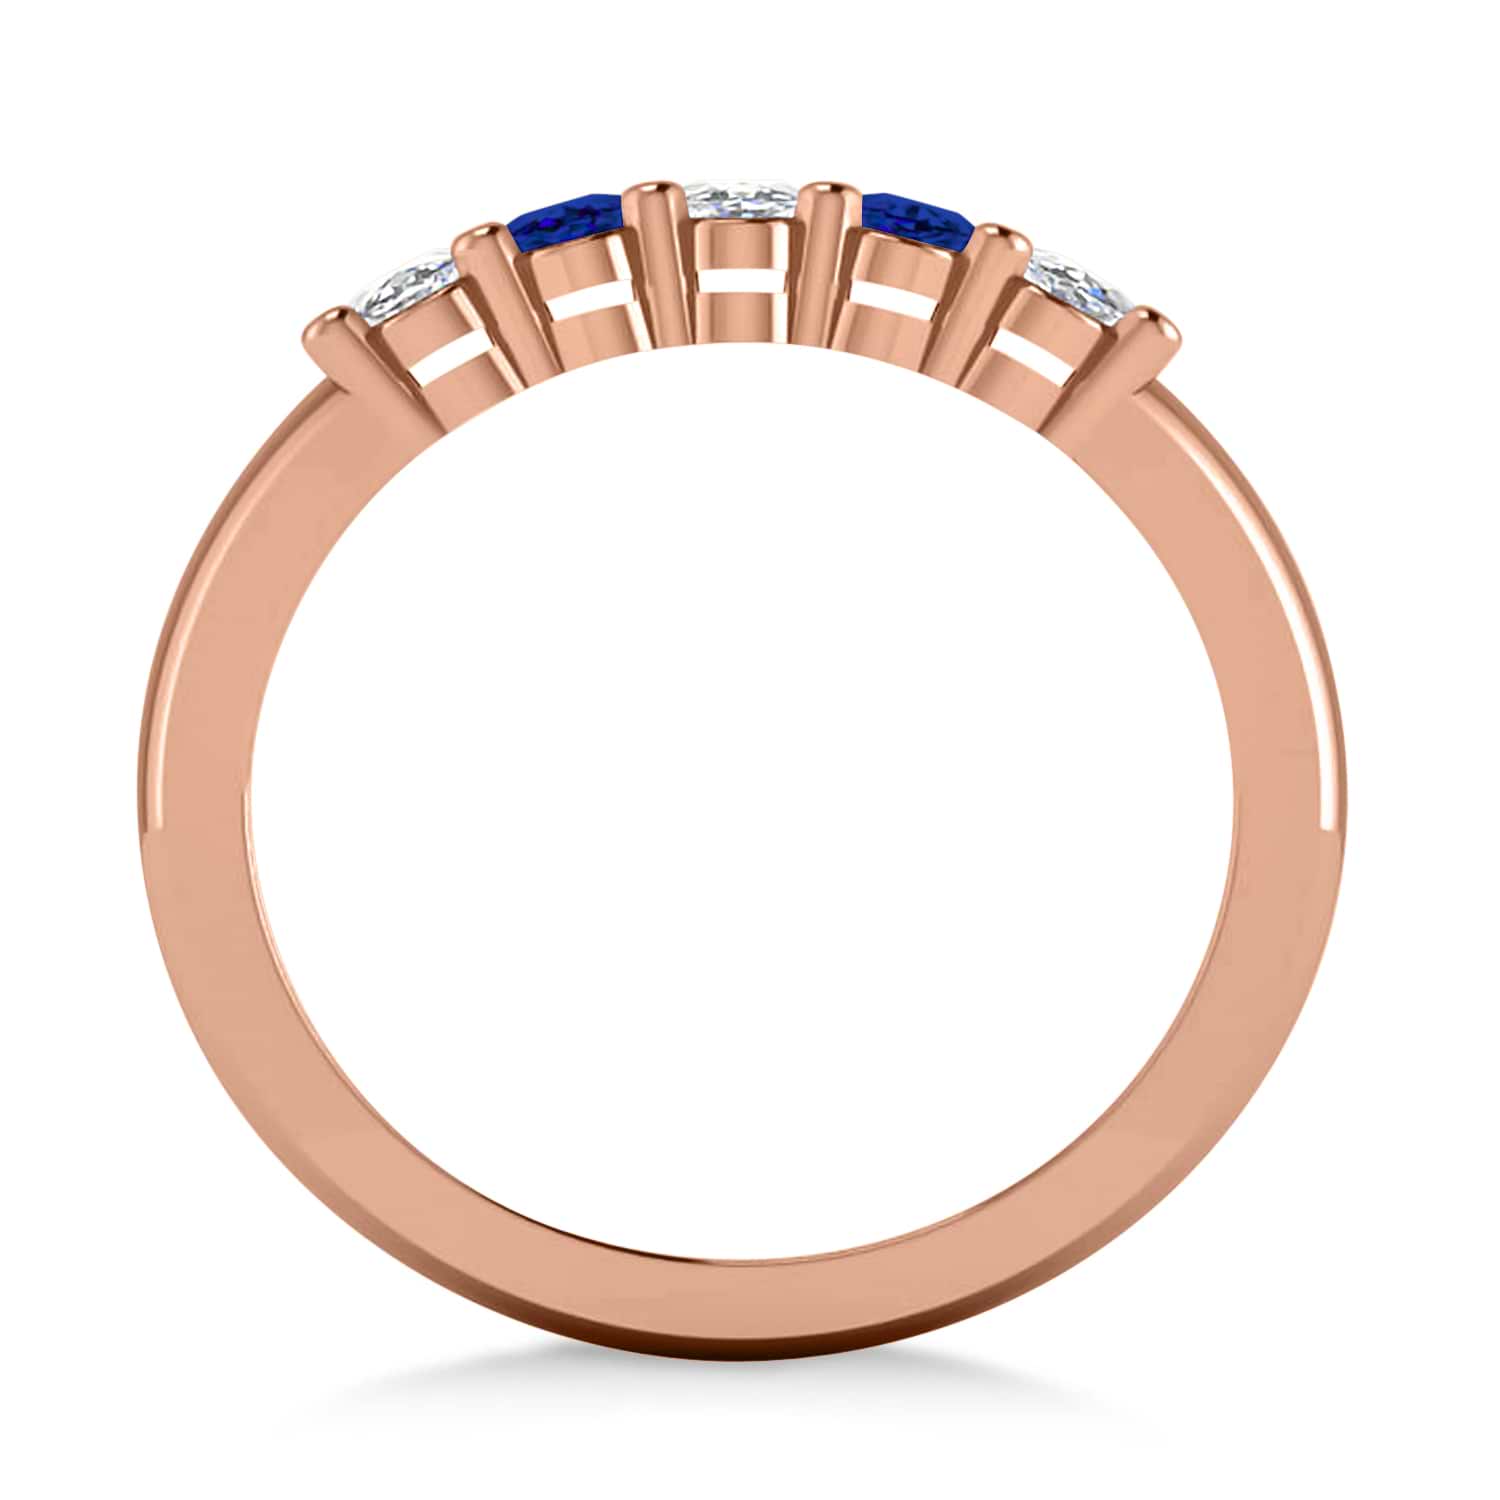 Oval Diamond & Blue Sapphire Five Stone Ring 14k Rose Gold (1.00ct)